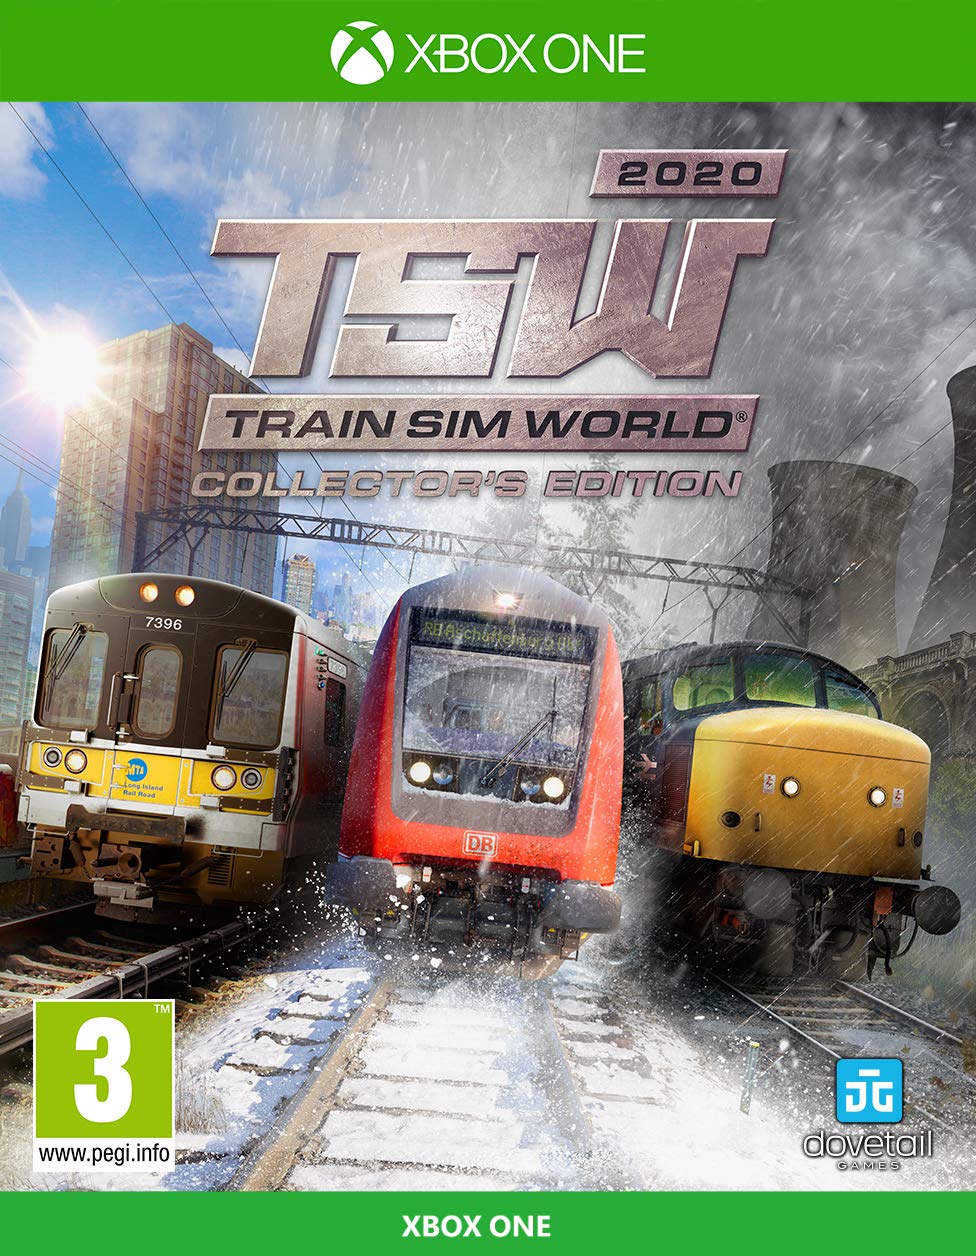 Train Sim World 2020 Deluxe Edition Digital Download Key (Xbox One) - 